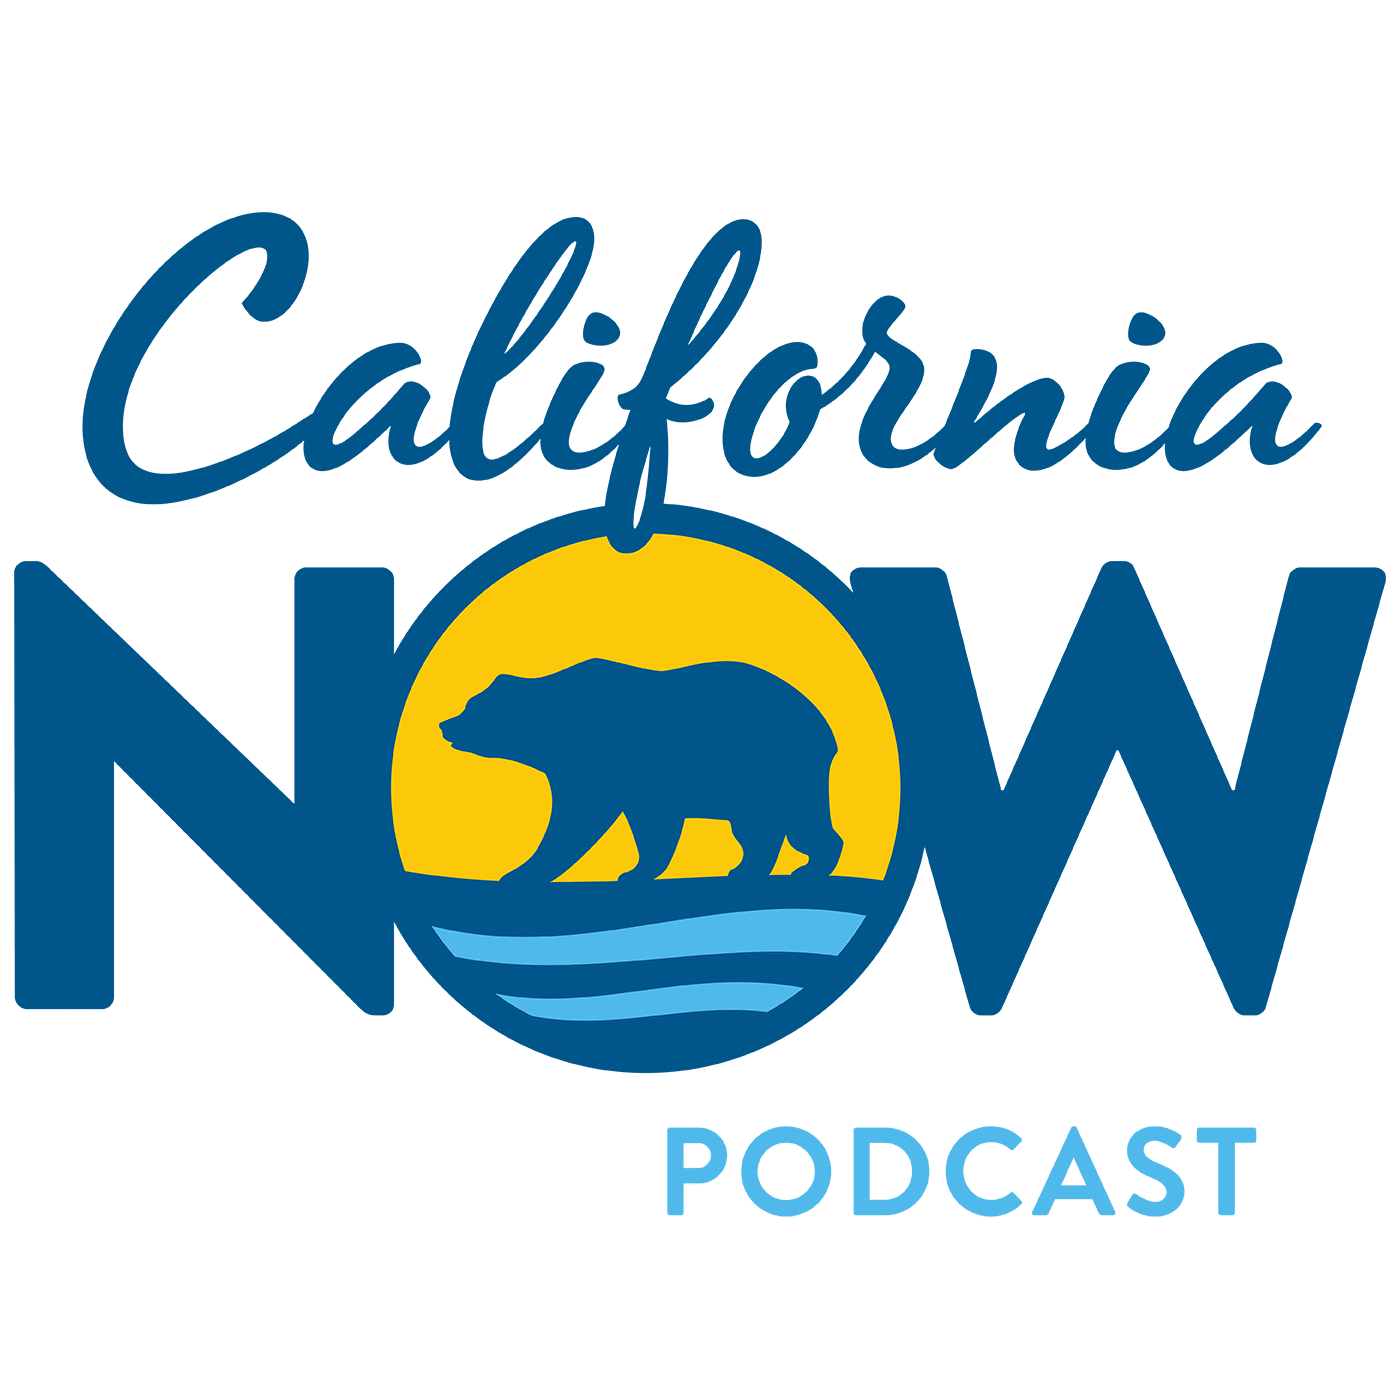 california now podcast tourismus